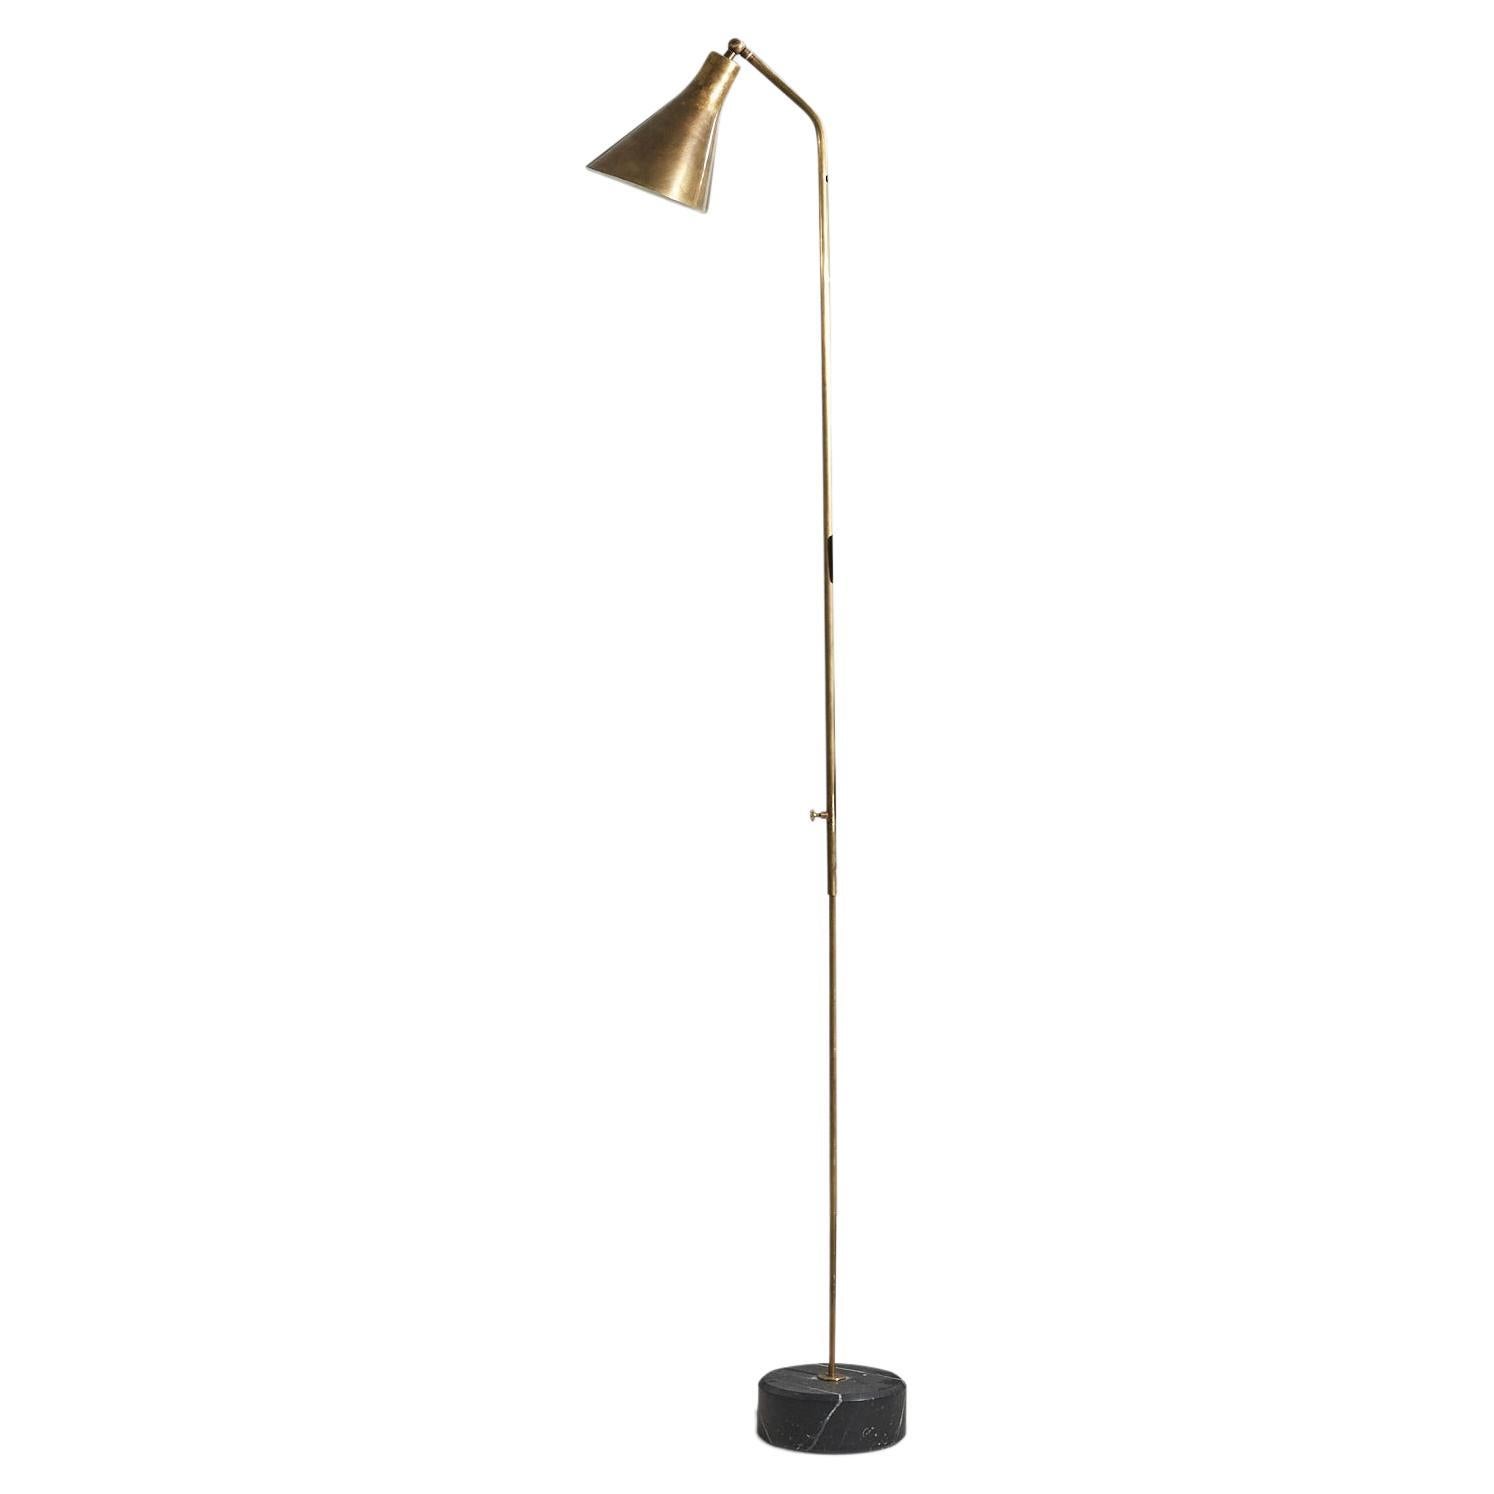 Ignazio Gardella, "Alzabile" Adjustable Floor Lamp, Brass, Marble, Italy, 1950s